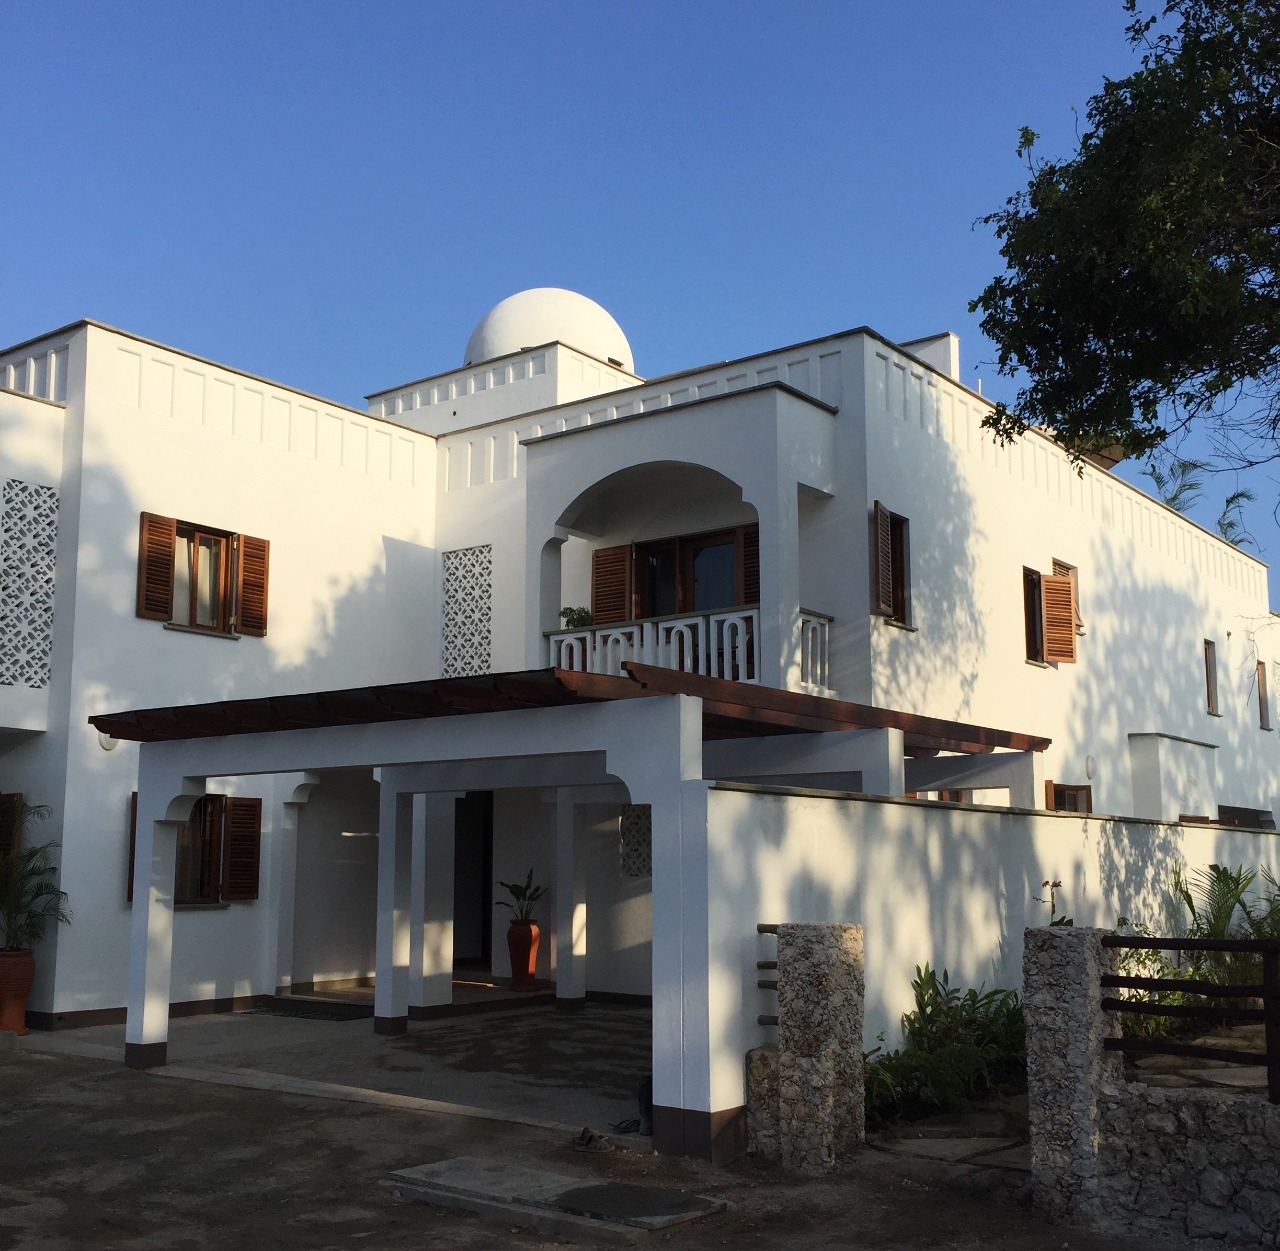 4 bedroom detached luxurious villas for sale in Nyali